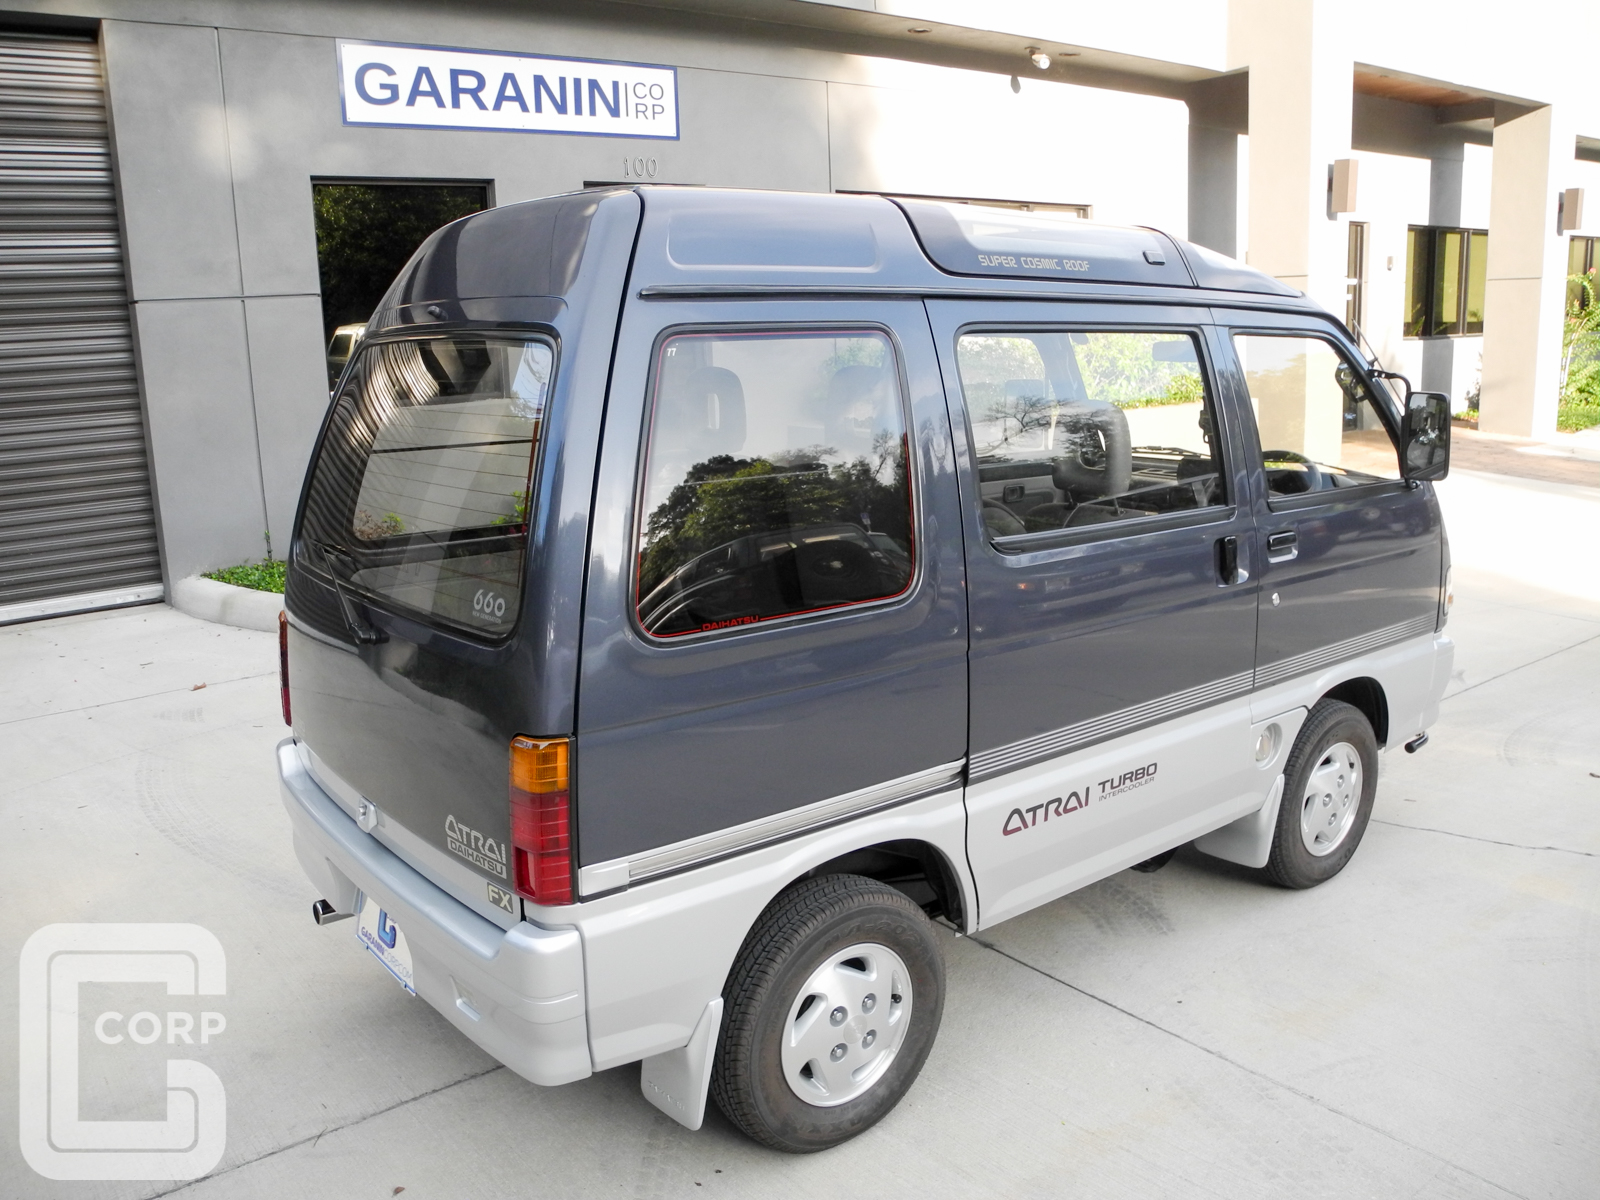 Garanin Corp-91 Daihatsu Atrai Turbo Intercooler Super Cosmic Roof 